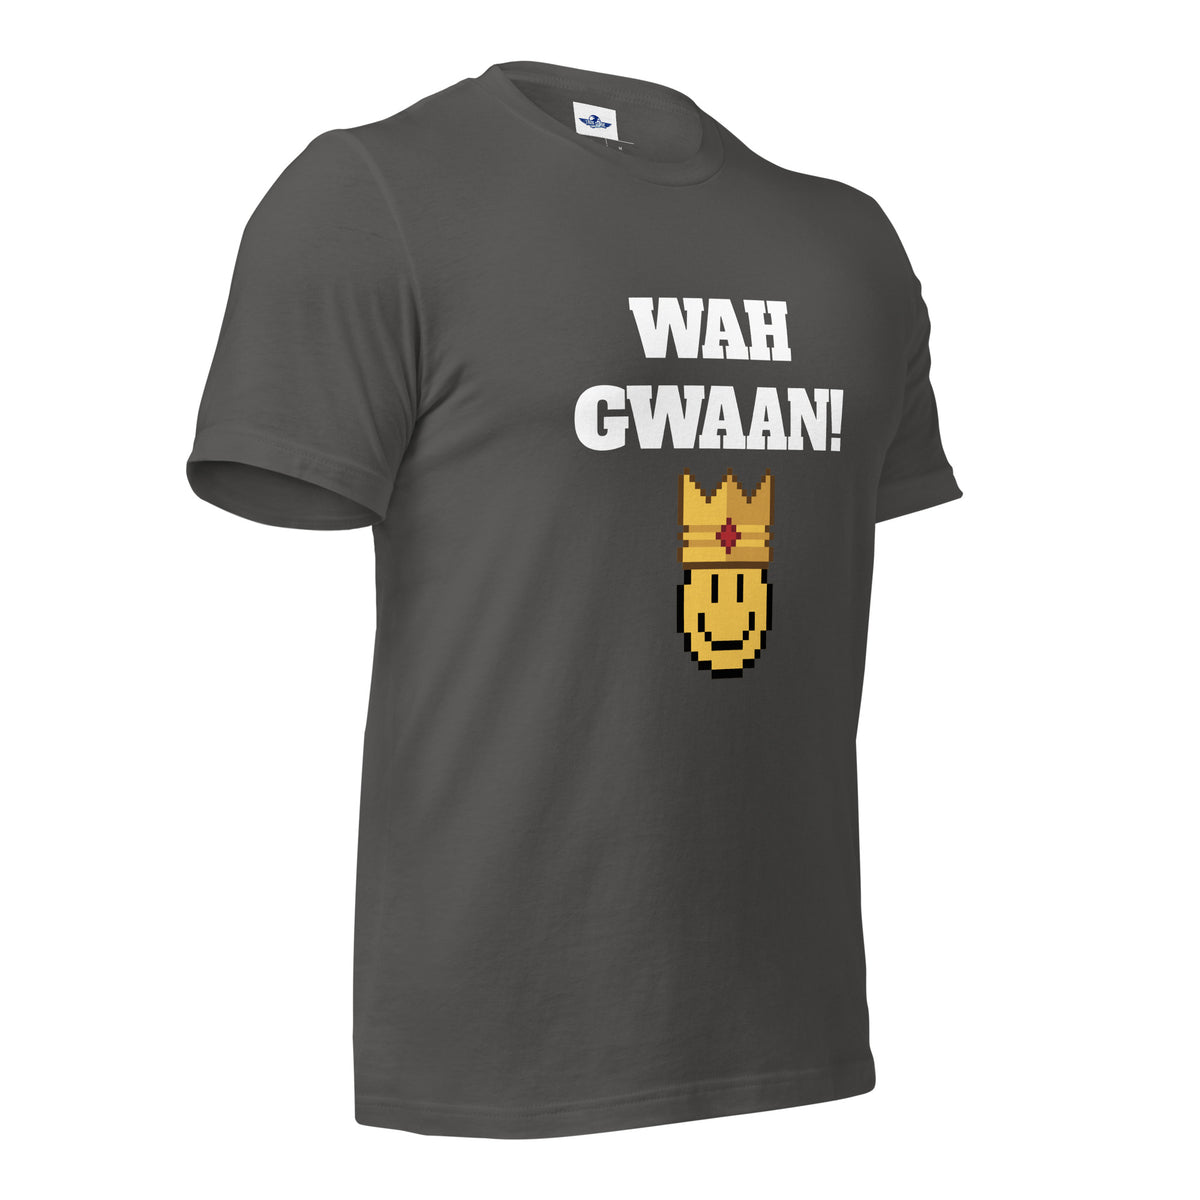 Wah Gwaan Men's T-Shirt